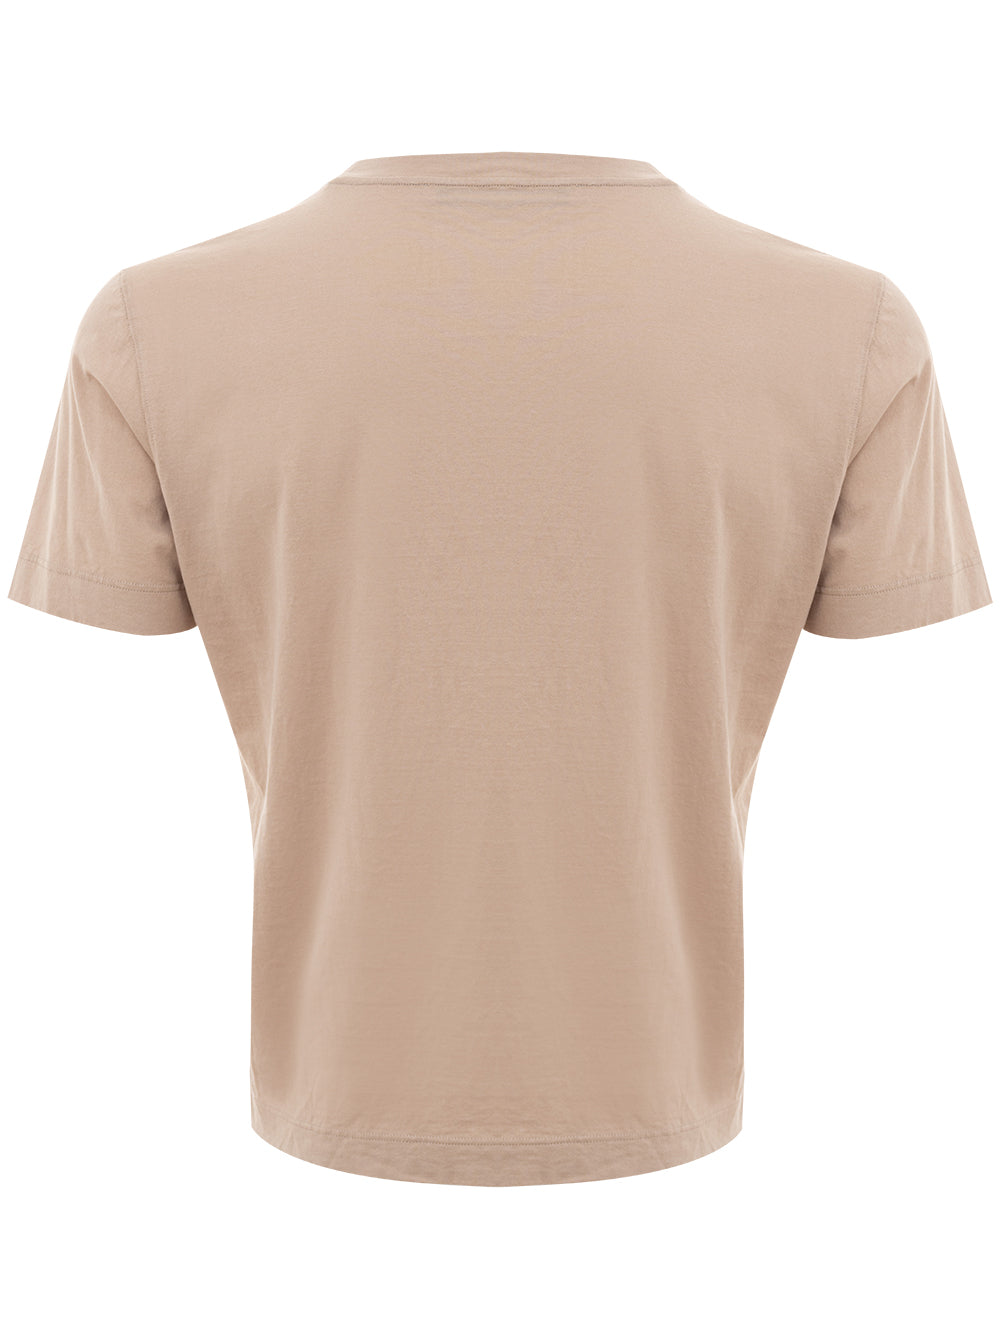 Gran Sasso Cotton Half Sleeve T-Shirt